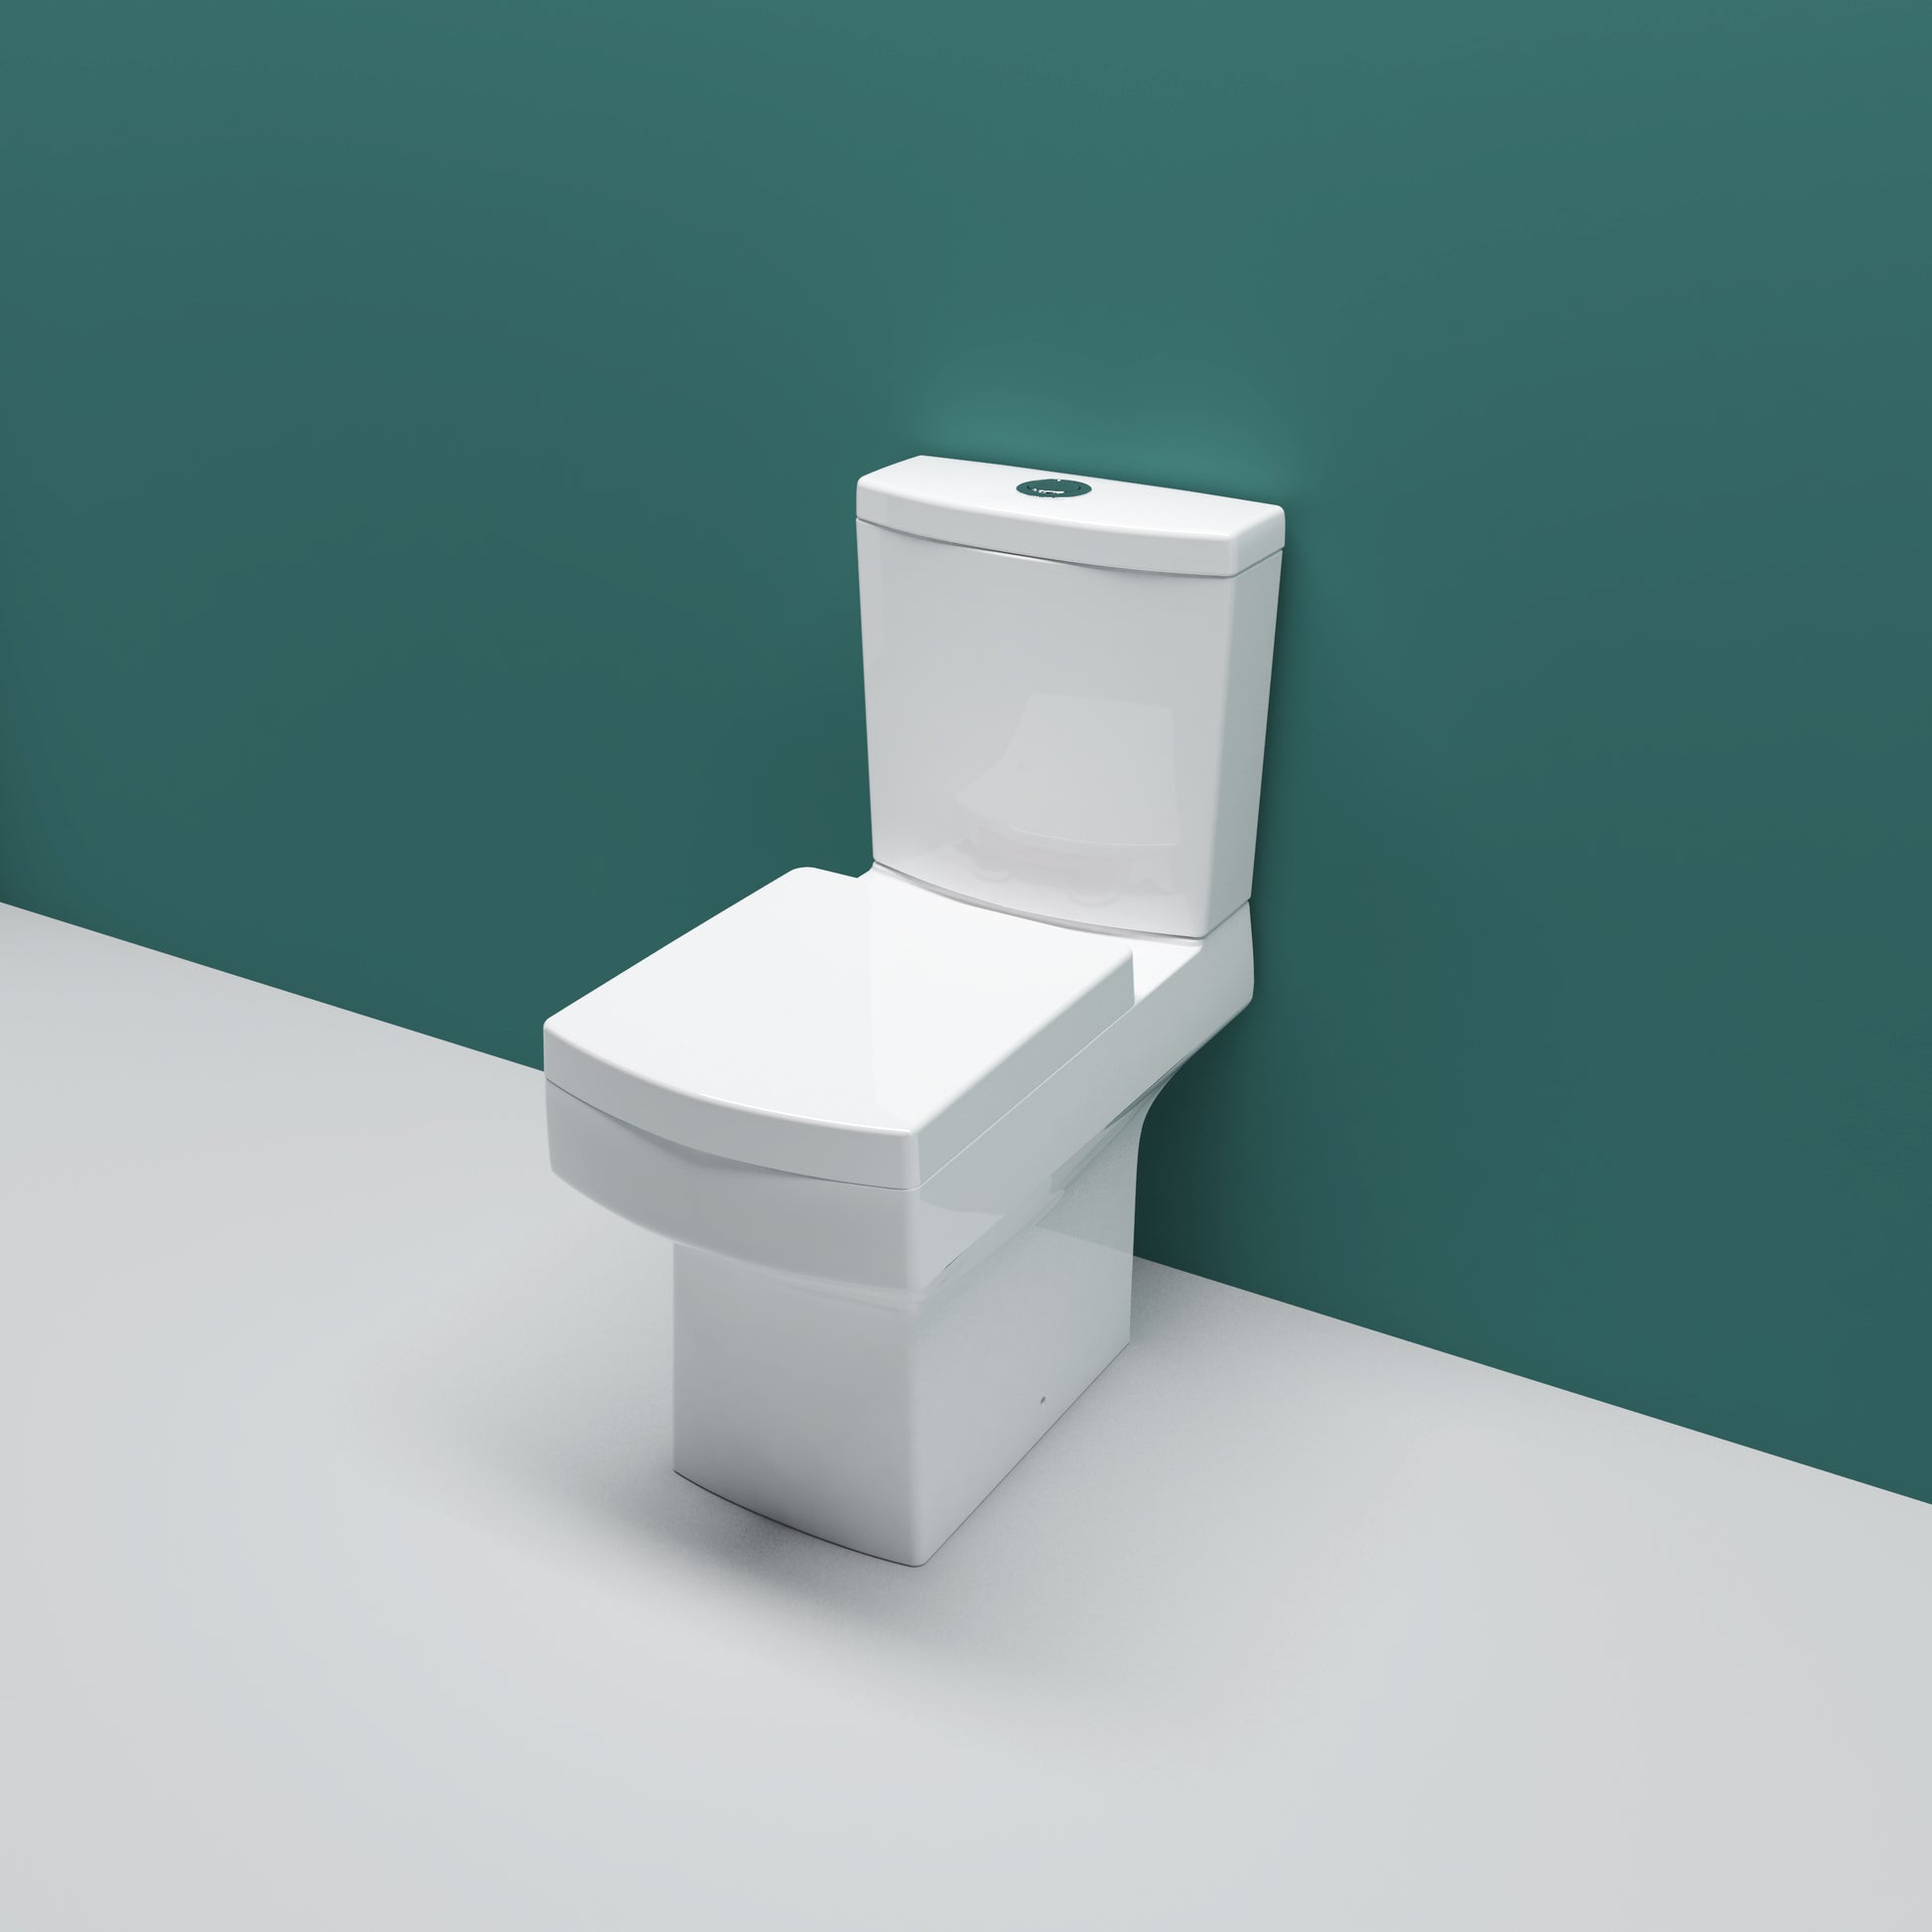 AICA Bathroom Ceramic Close Coupled Toilet White Soft Close Seat Dual 